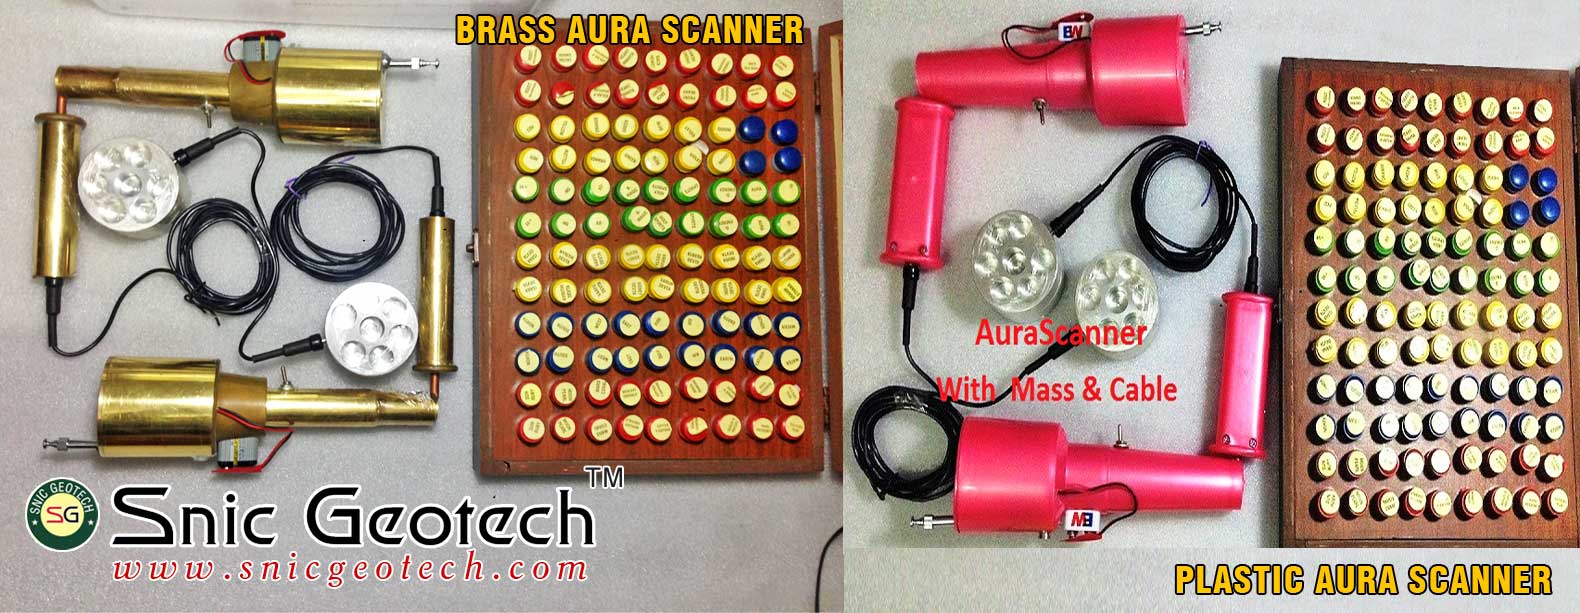 Brass Aura Scanner Plastic Aura Scanner manufacturers exporters suppliers in india punjab ludhiana